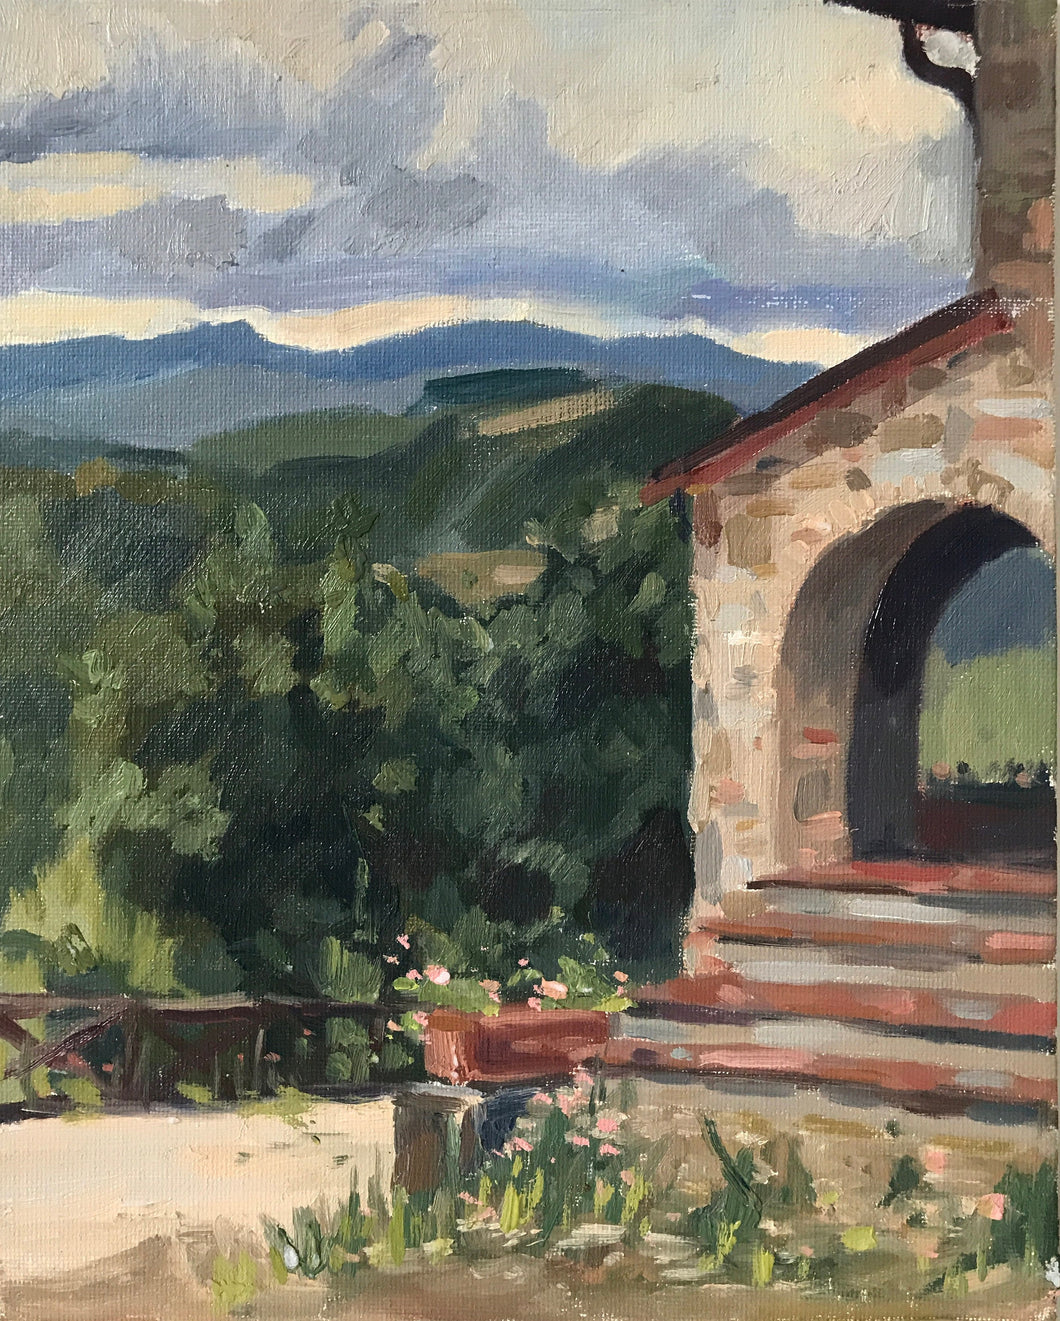 Umbria Painting Italy Oil Painting on Canvas Umbrian Landscape Original Art Todi Original Painting Arte